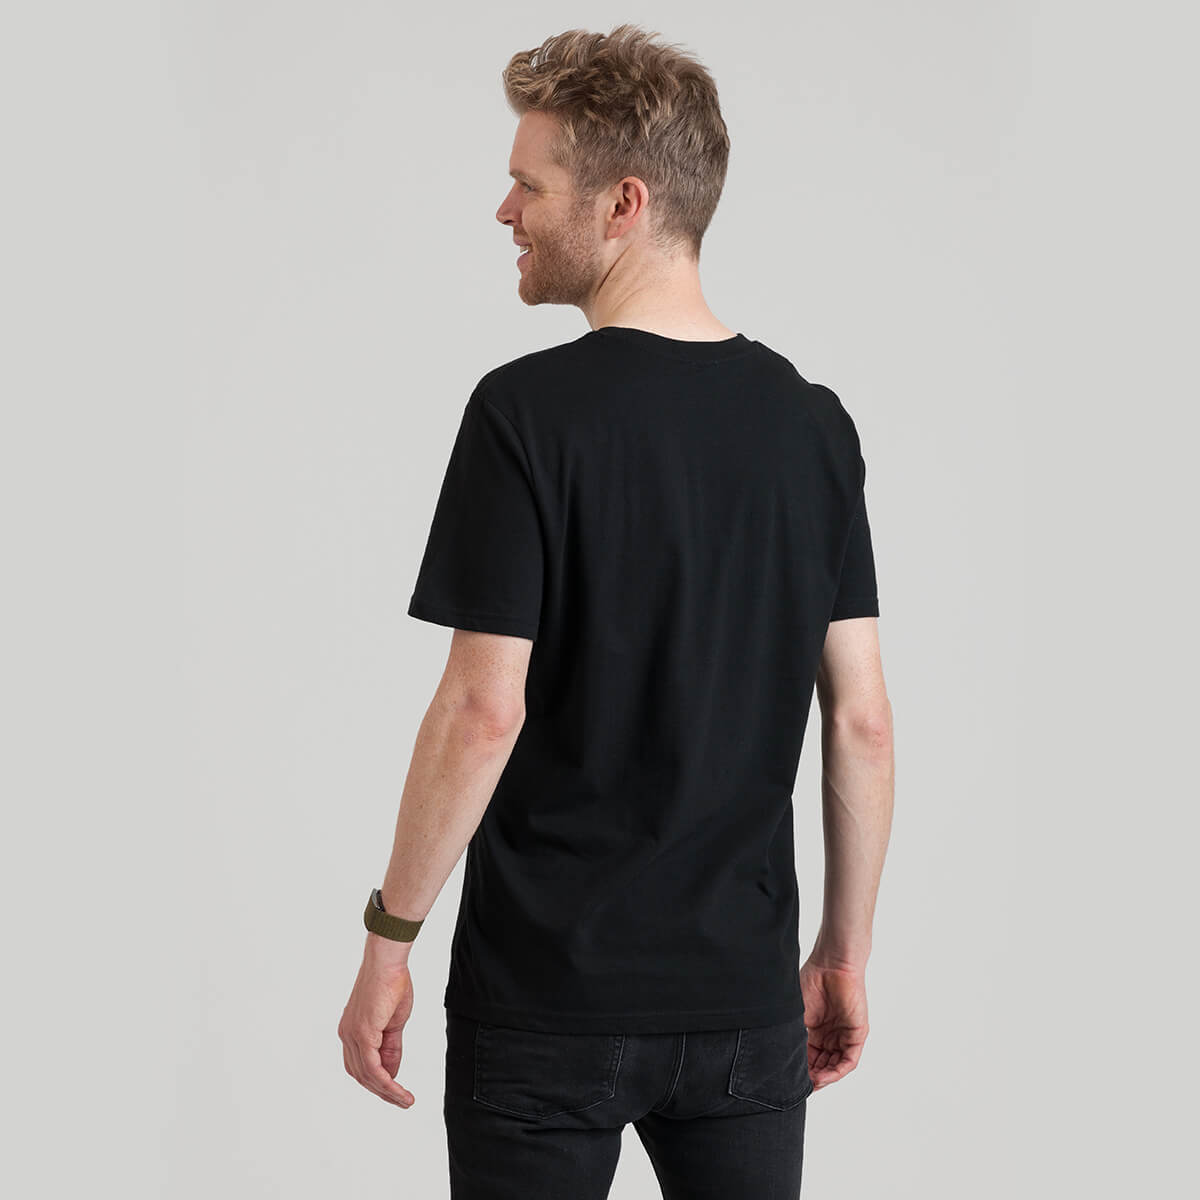 GCN Core Black T-Shirt